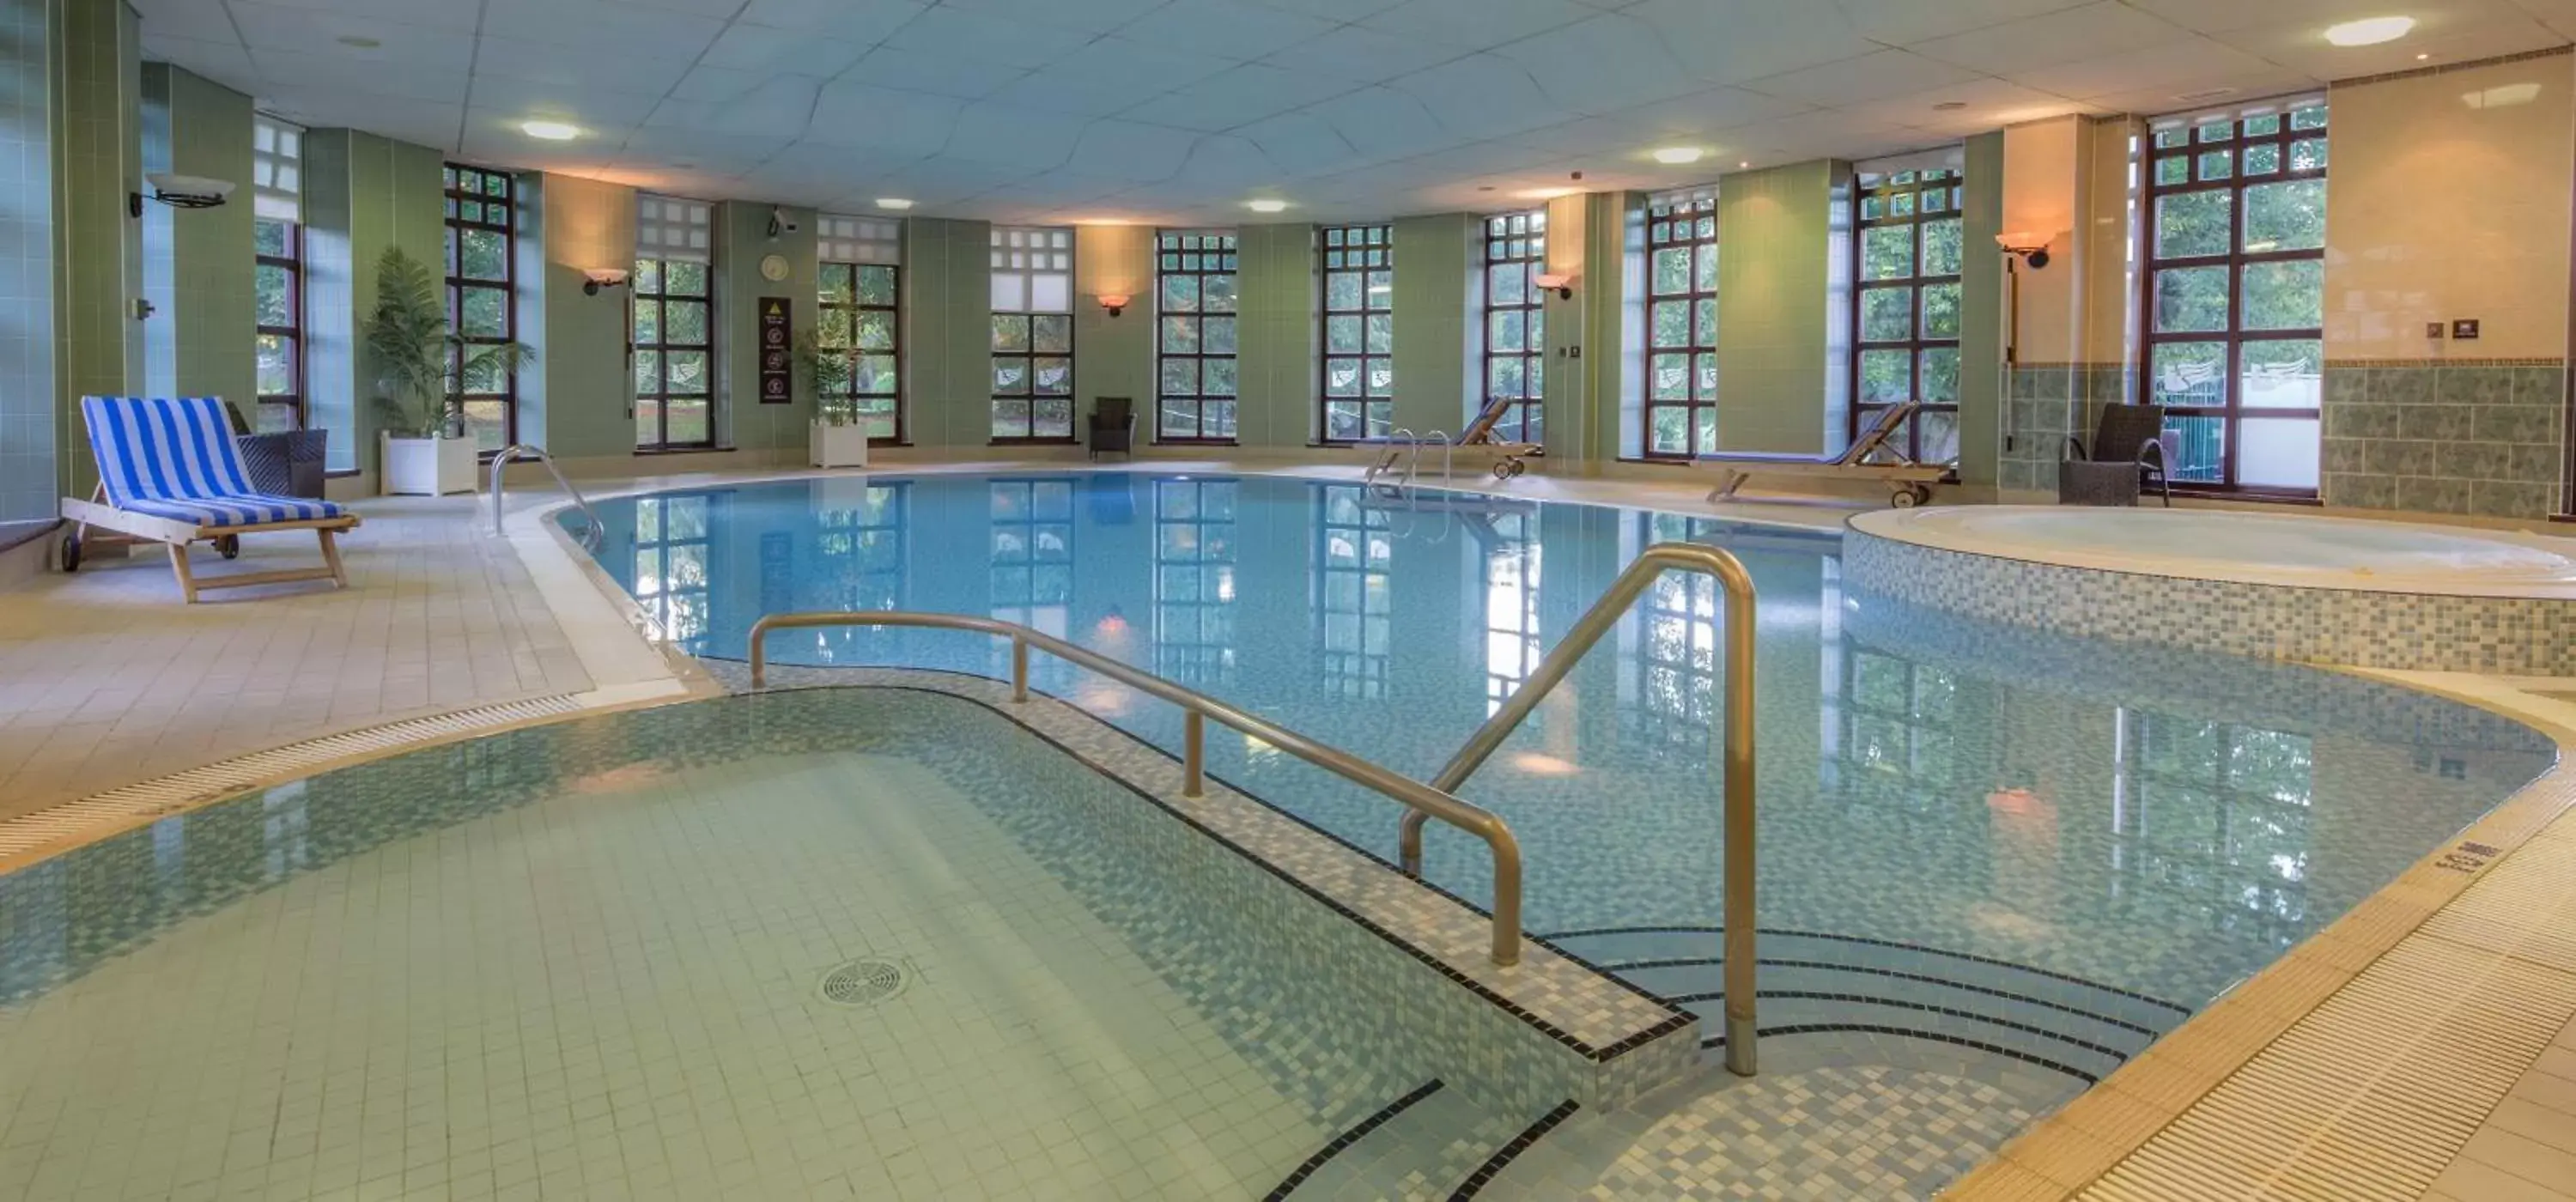 Pool view, Swimming Pool in Hilton Puckrup Hall, Tewkesbury